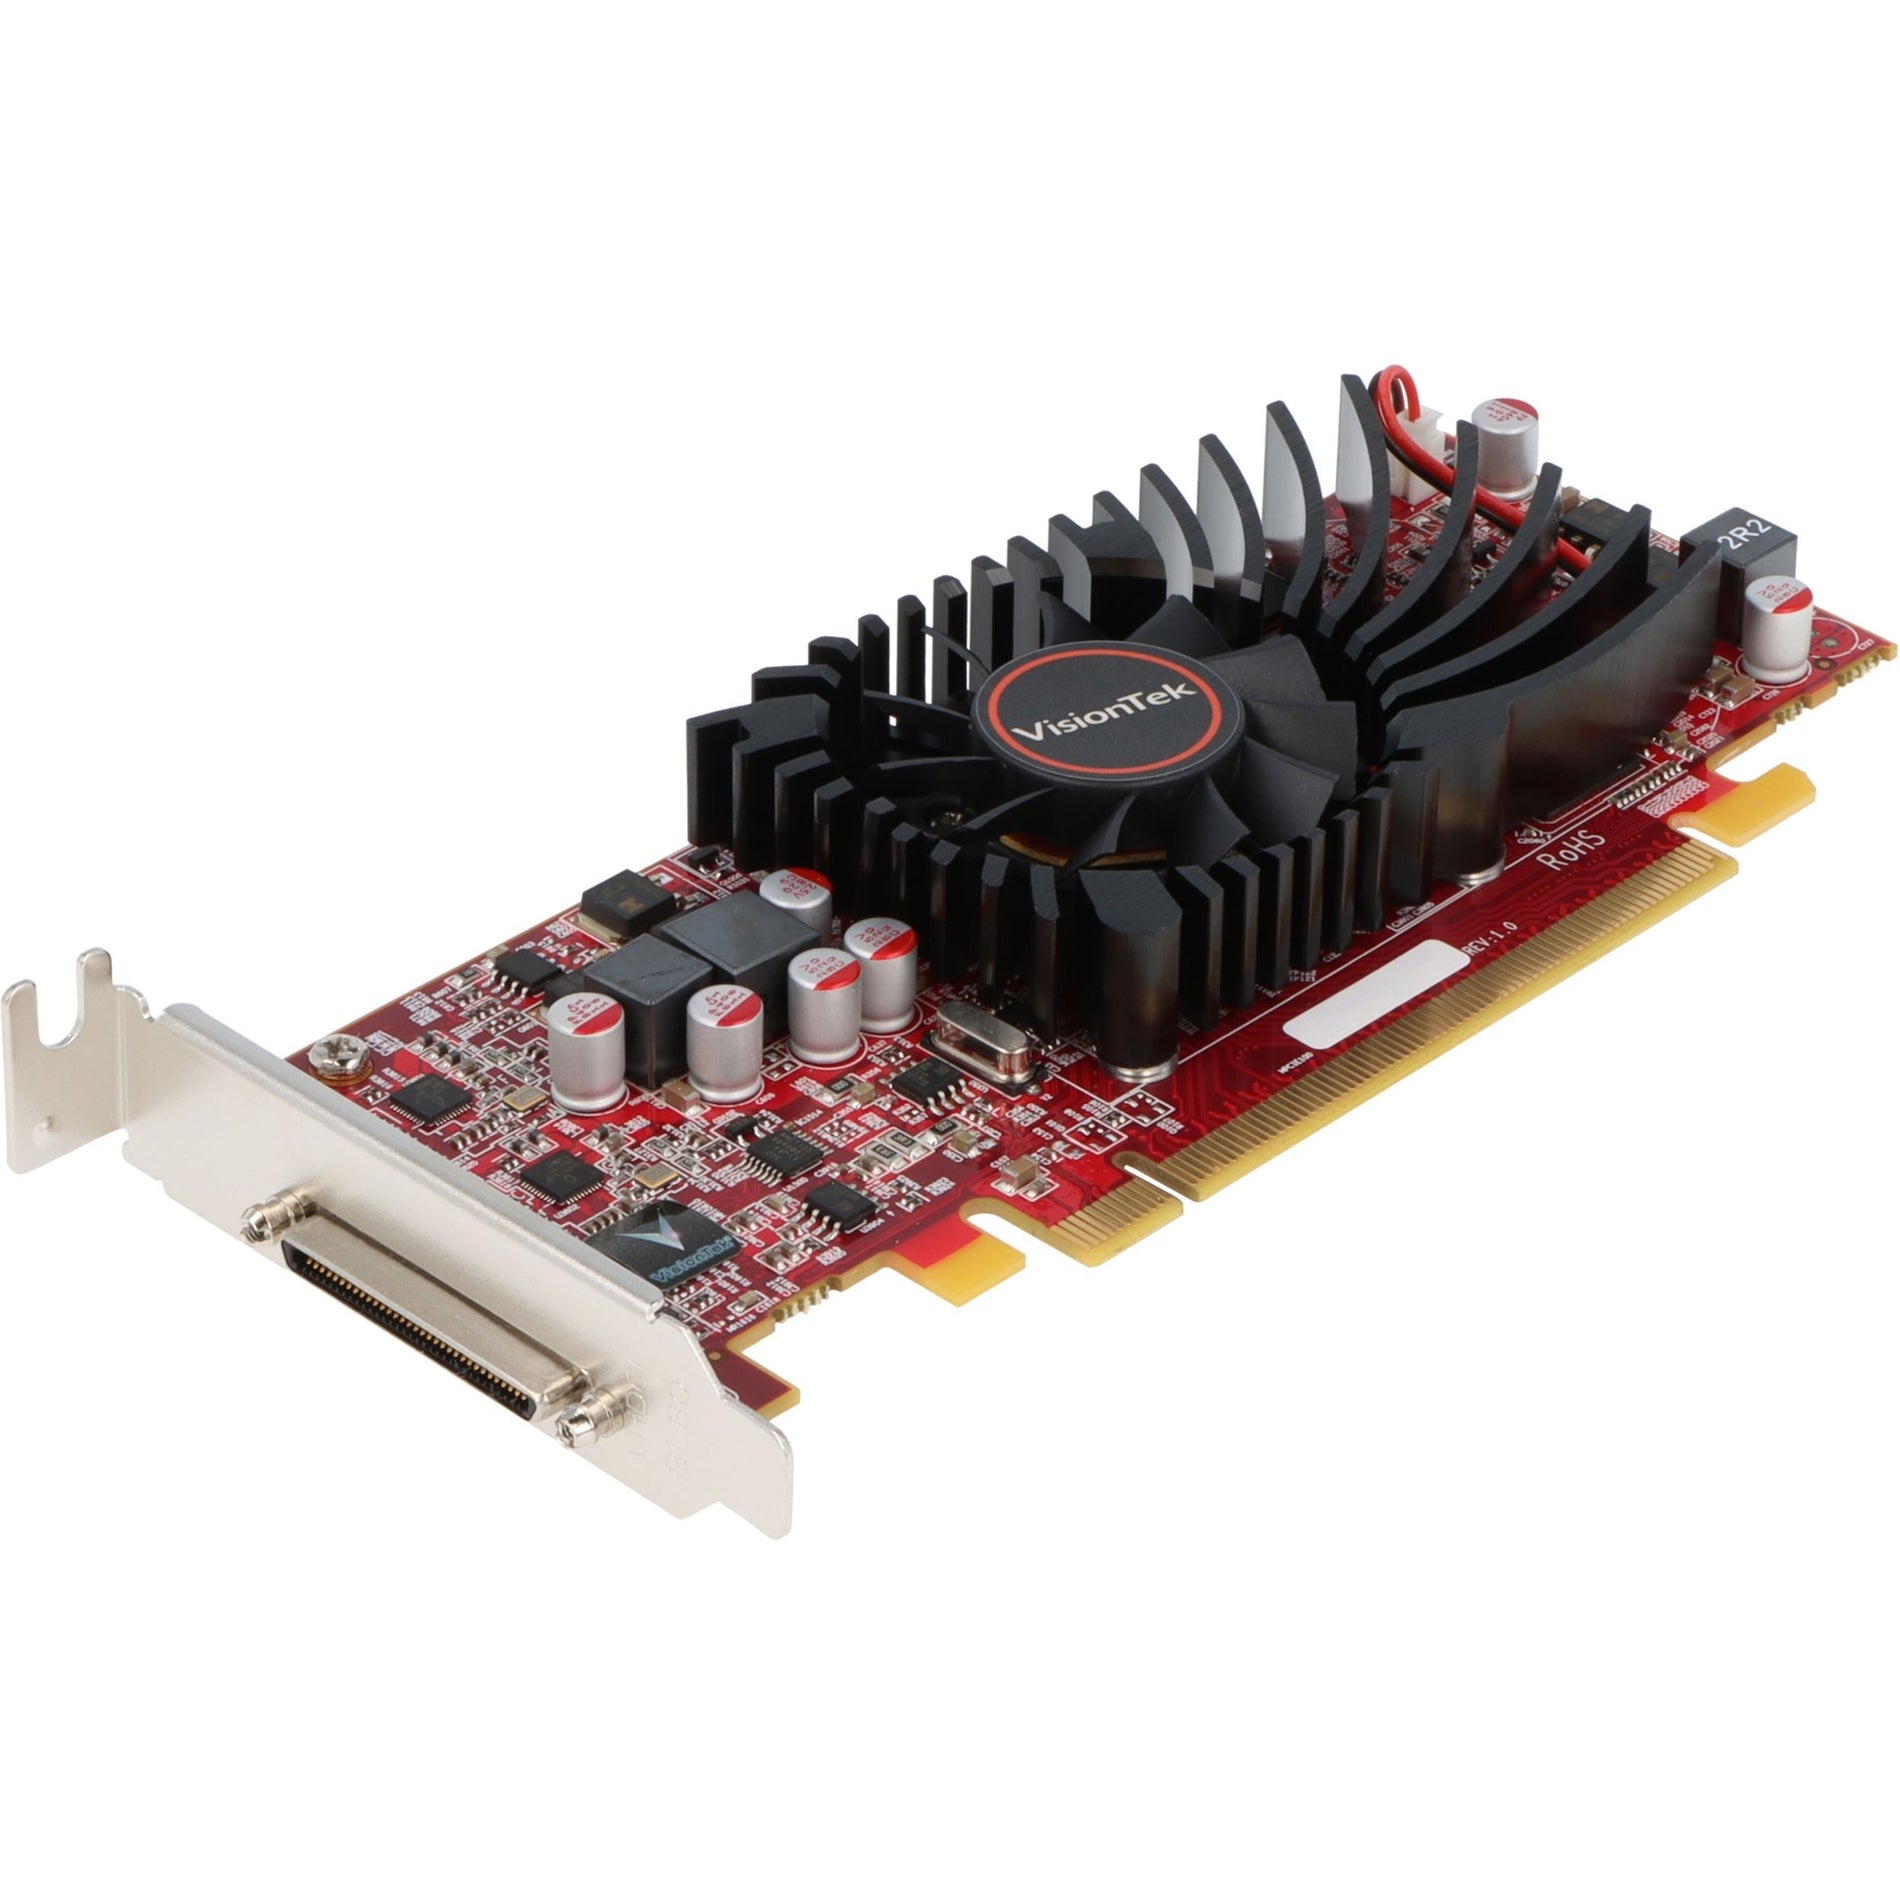 VisionTek 900901 AMD Radeon HD 5570 Graphic Card, 1GB DDR3, 4M VHDCI HDMI (4x HDMI)